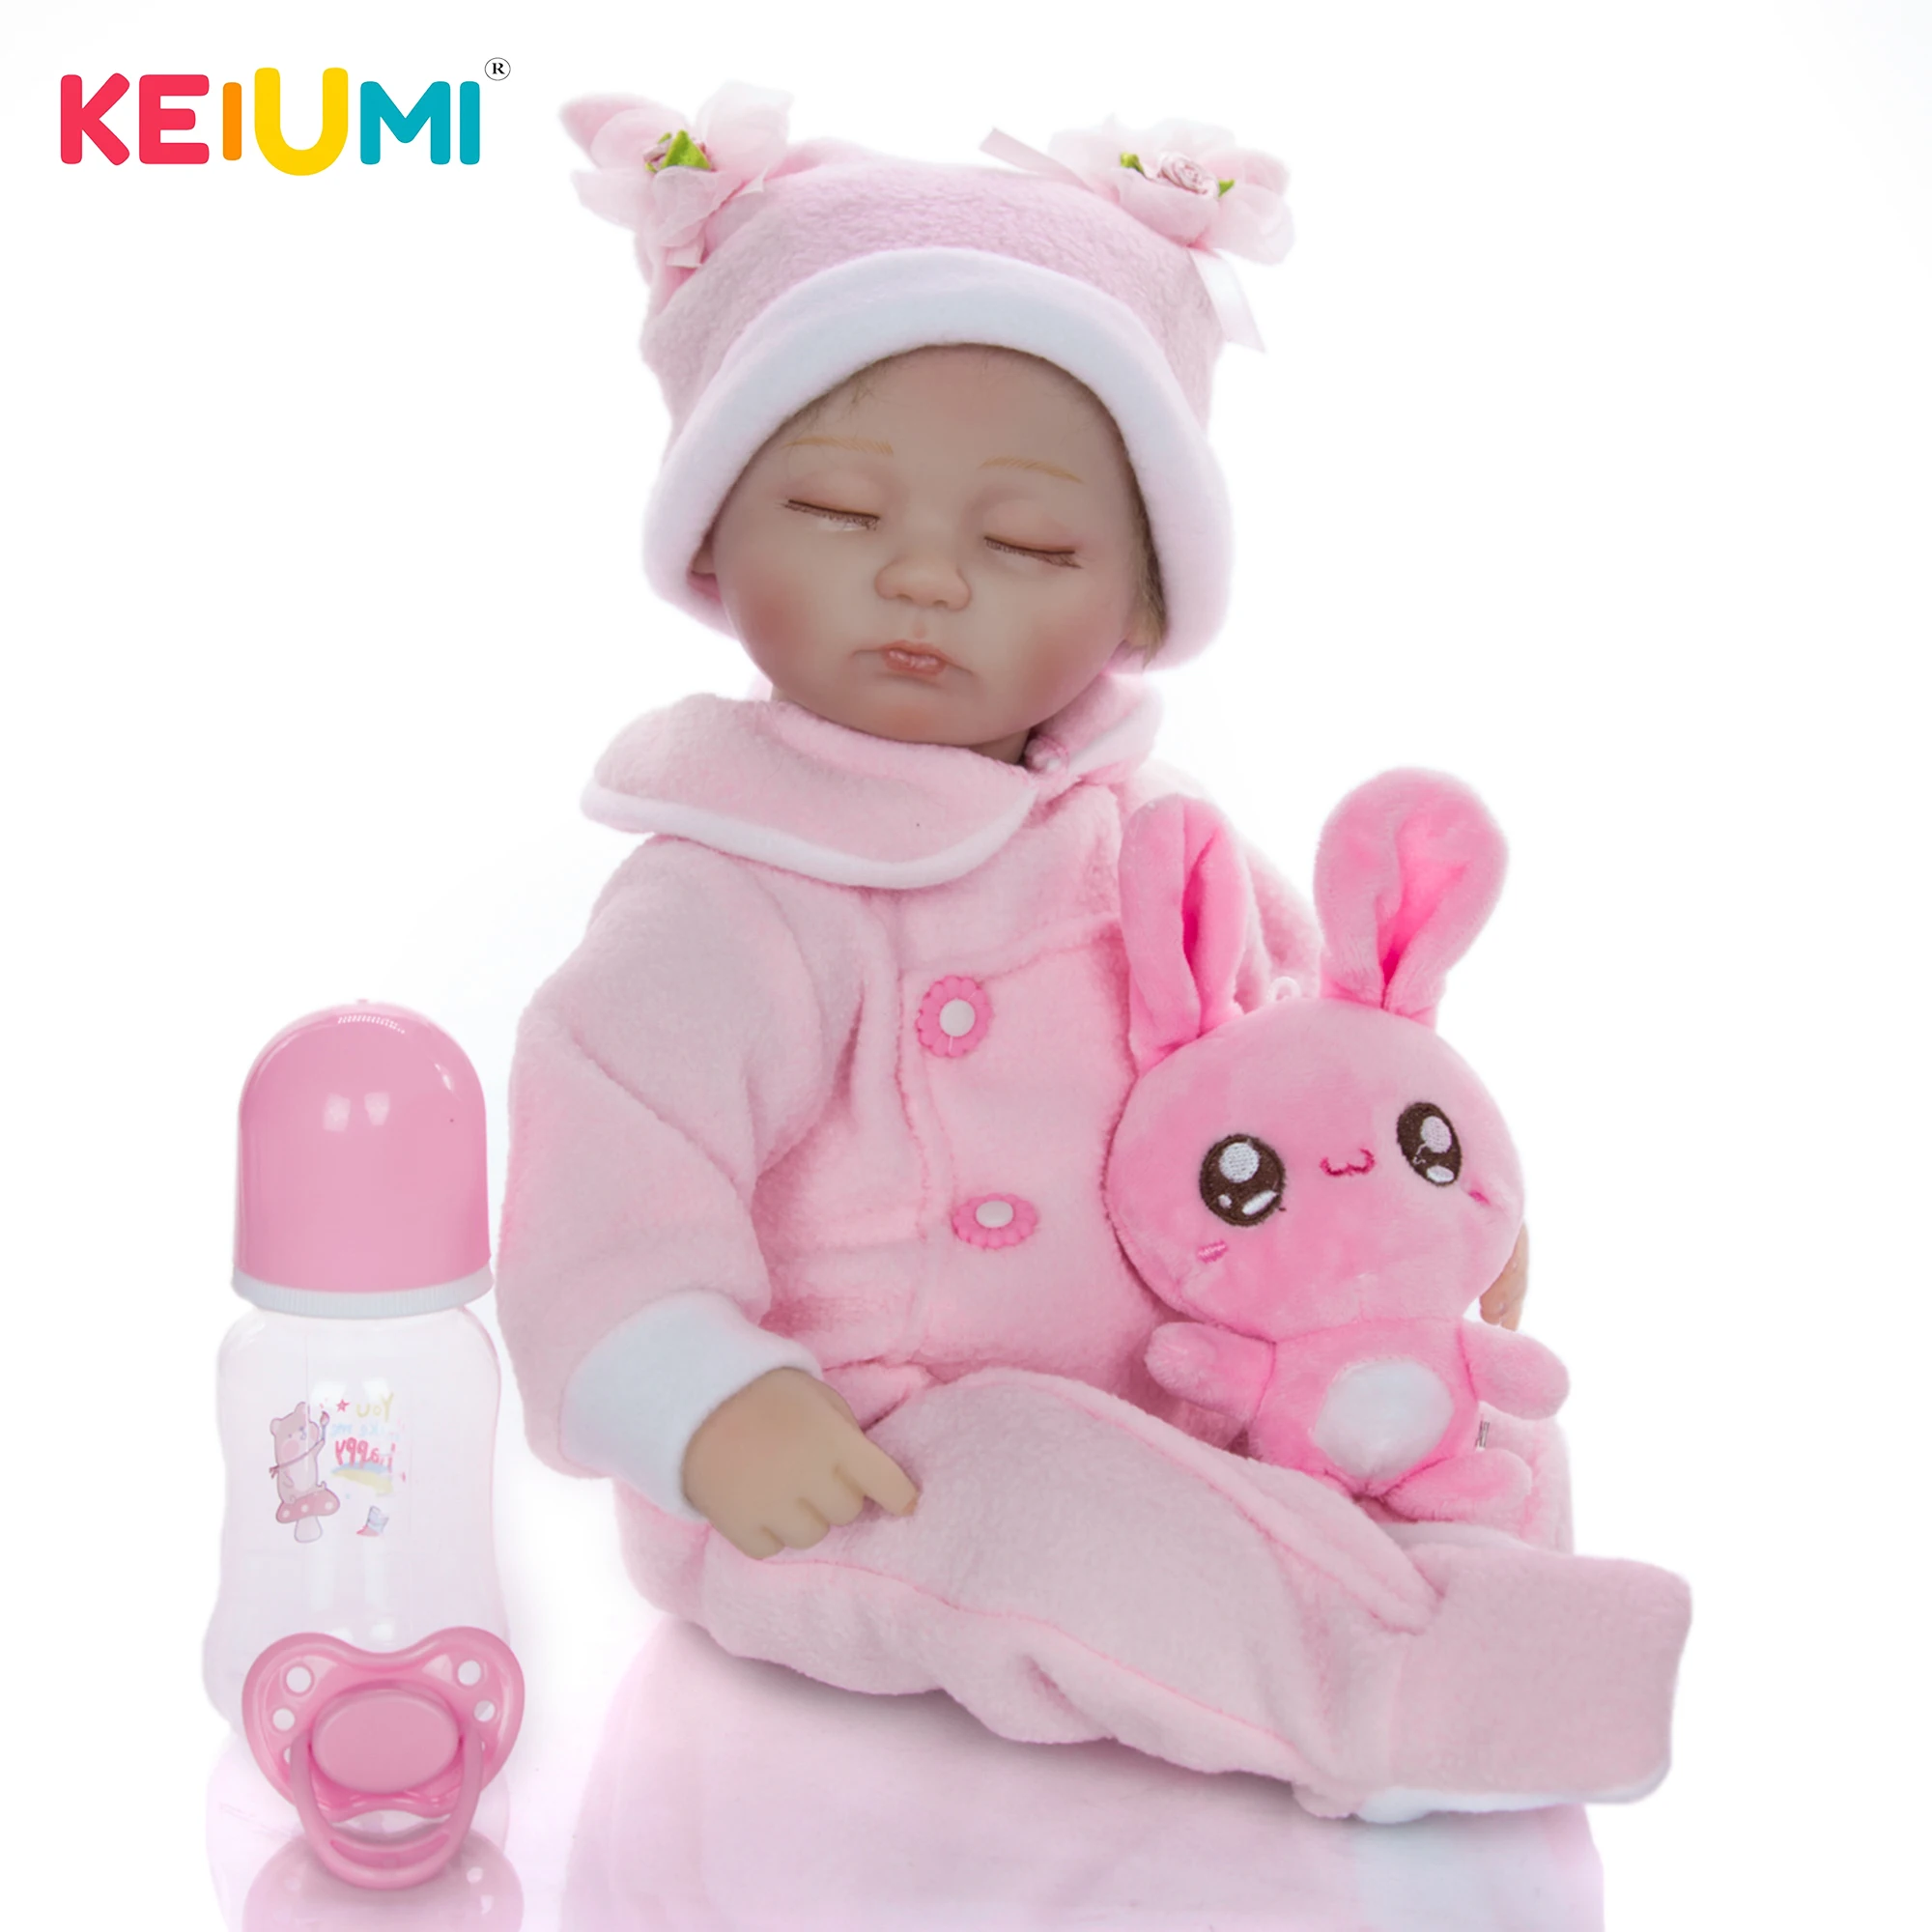 

KEIUMI 17 Inch Realistic As Sleeping Lifelike Reborn Baby Doll Soft Silicone Reborn Close Eyes Doll Toy For Kid Birthday Gift